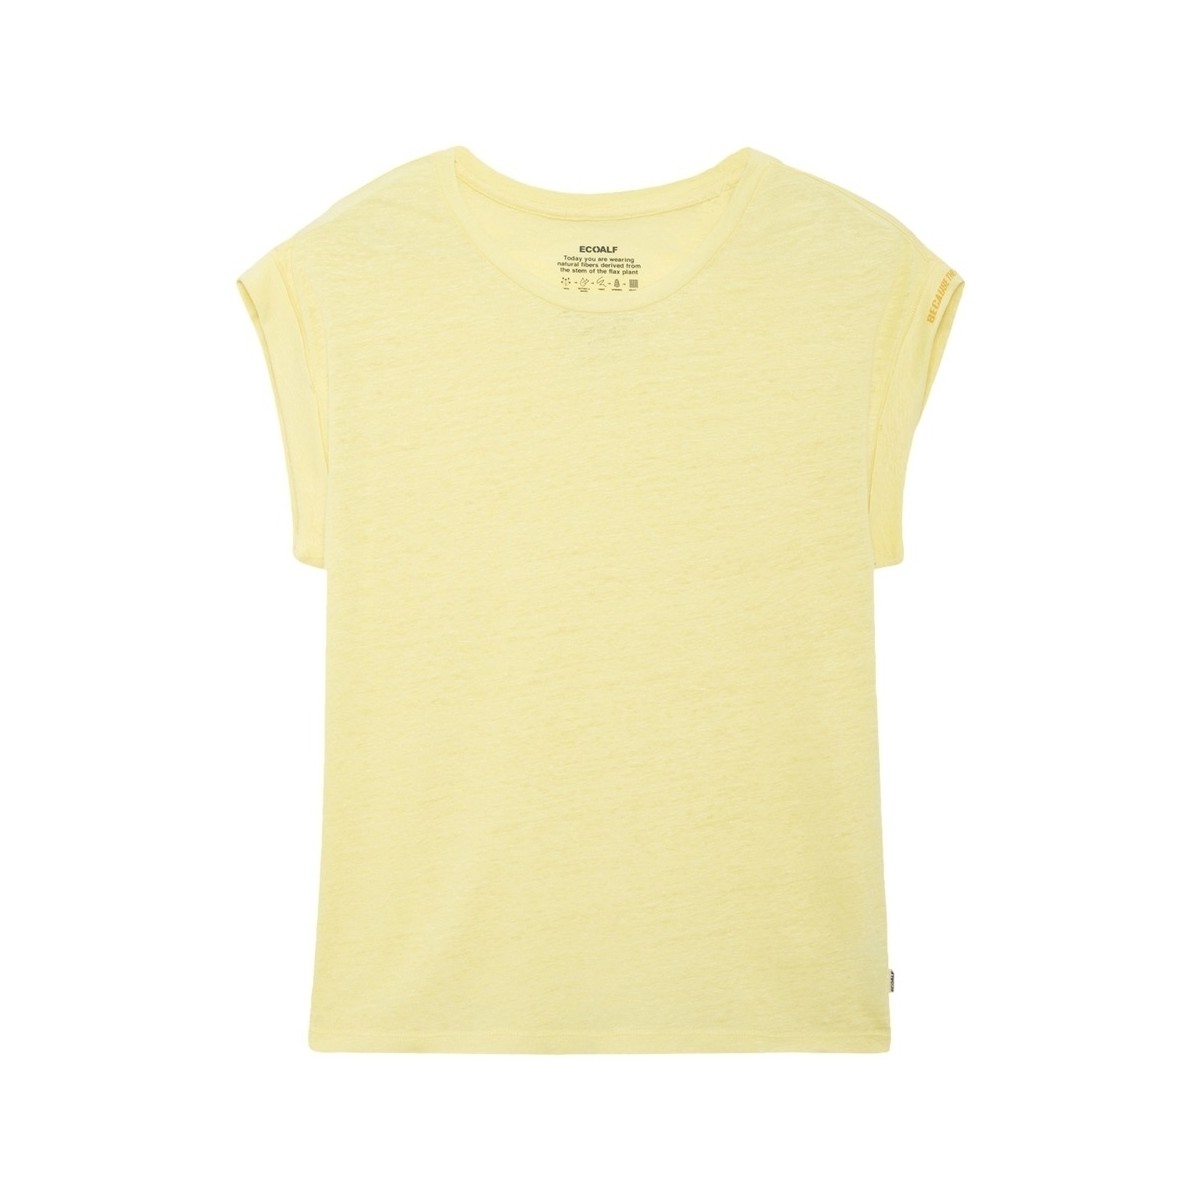 textil Dame Sweatshirts Ecoalf Aveiroalf T-Shirt - Lemonade Gul